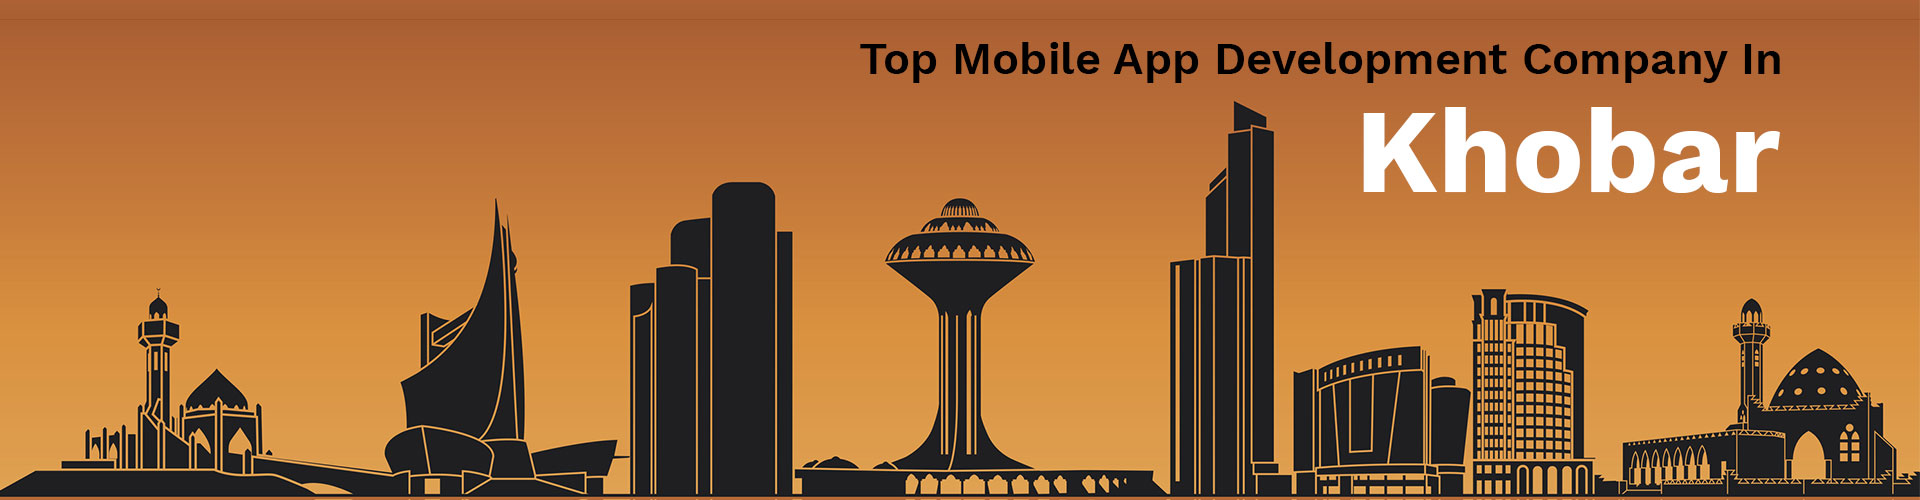 mobile app development company khobar